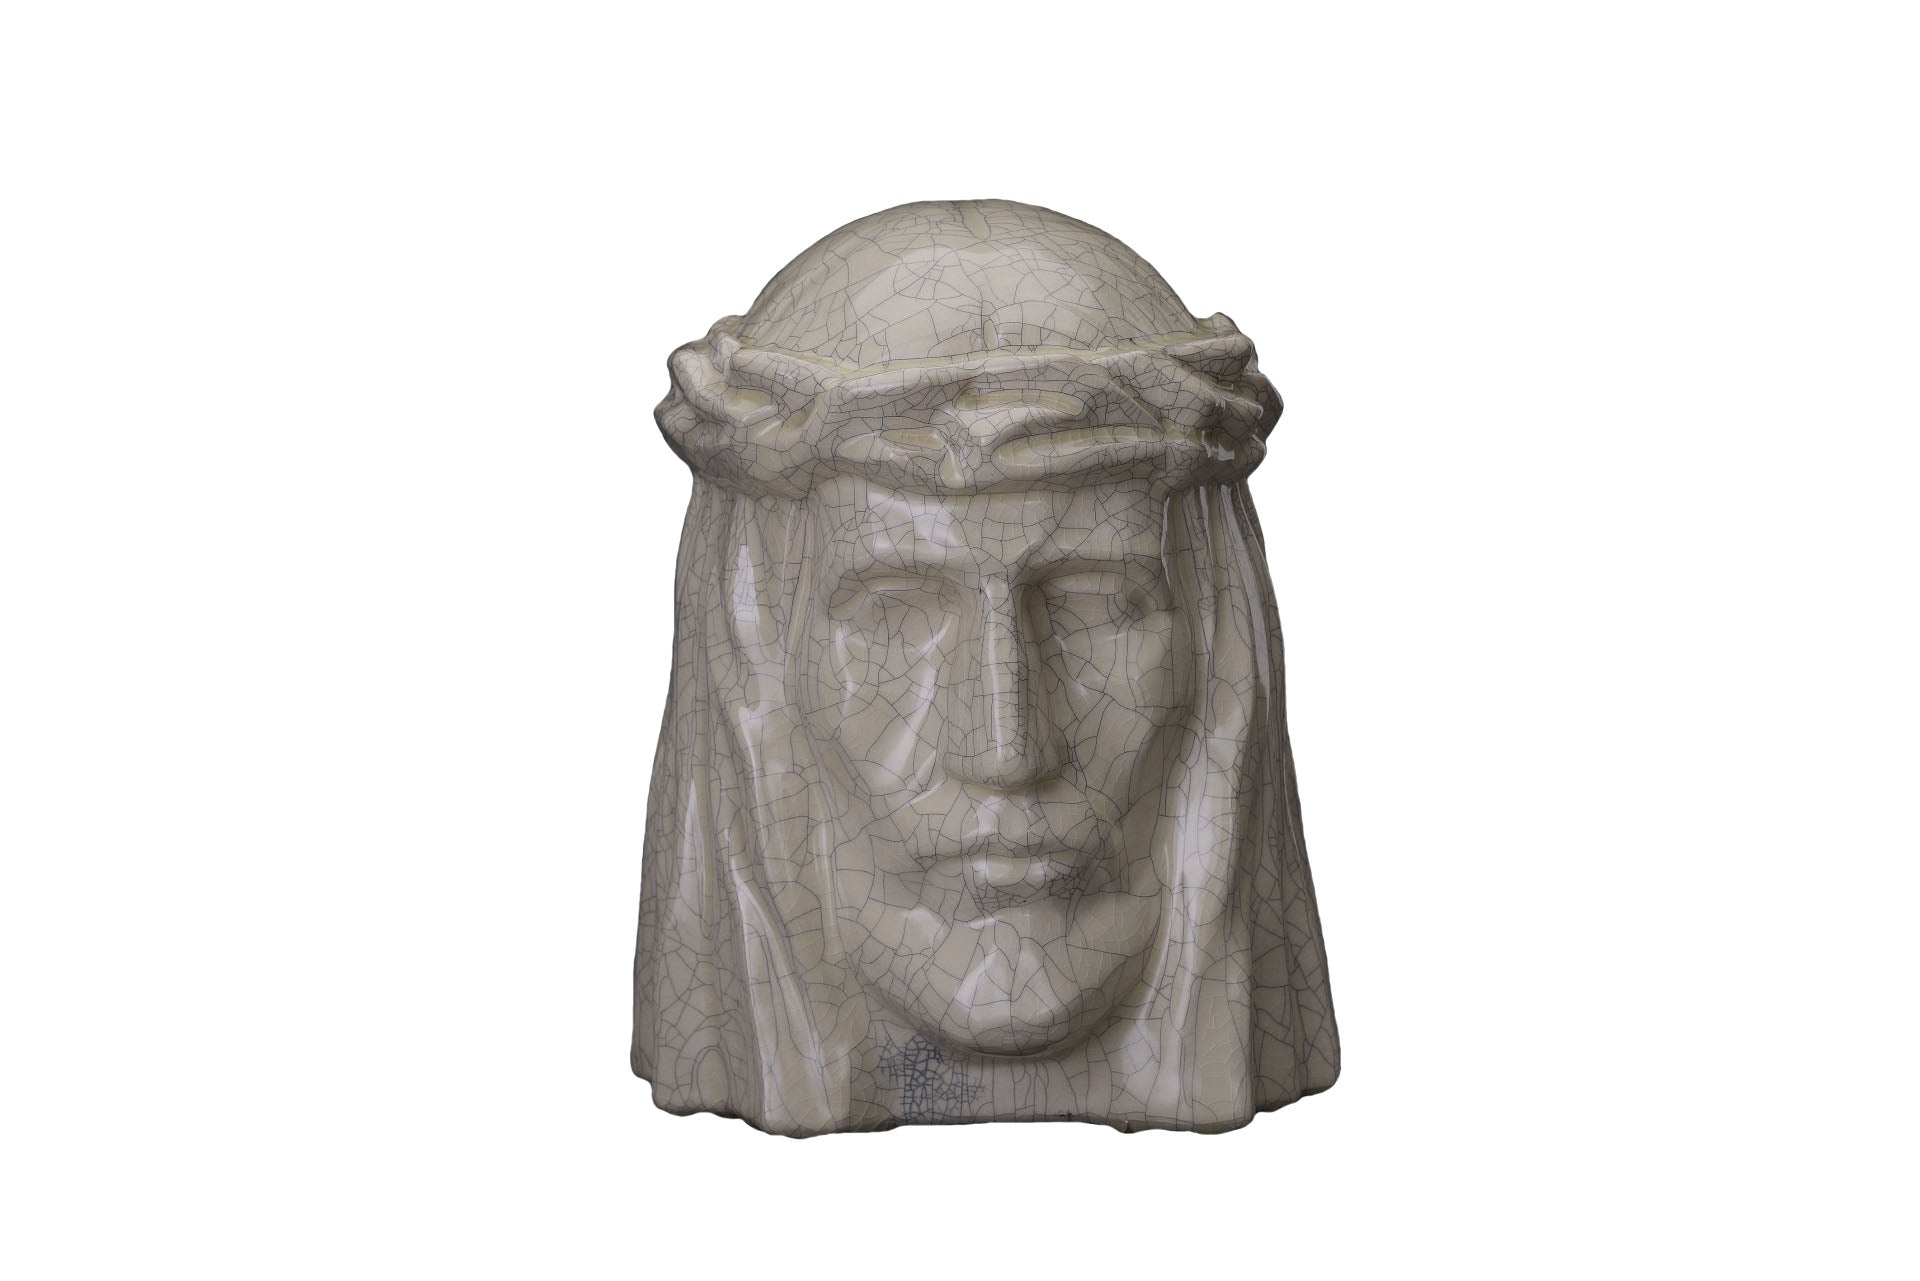 Urn Christ ceramic